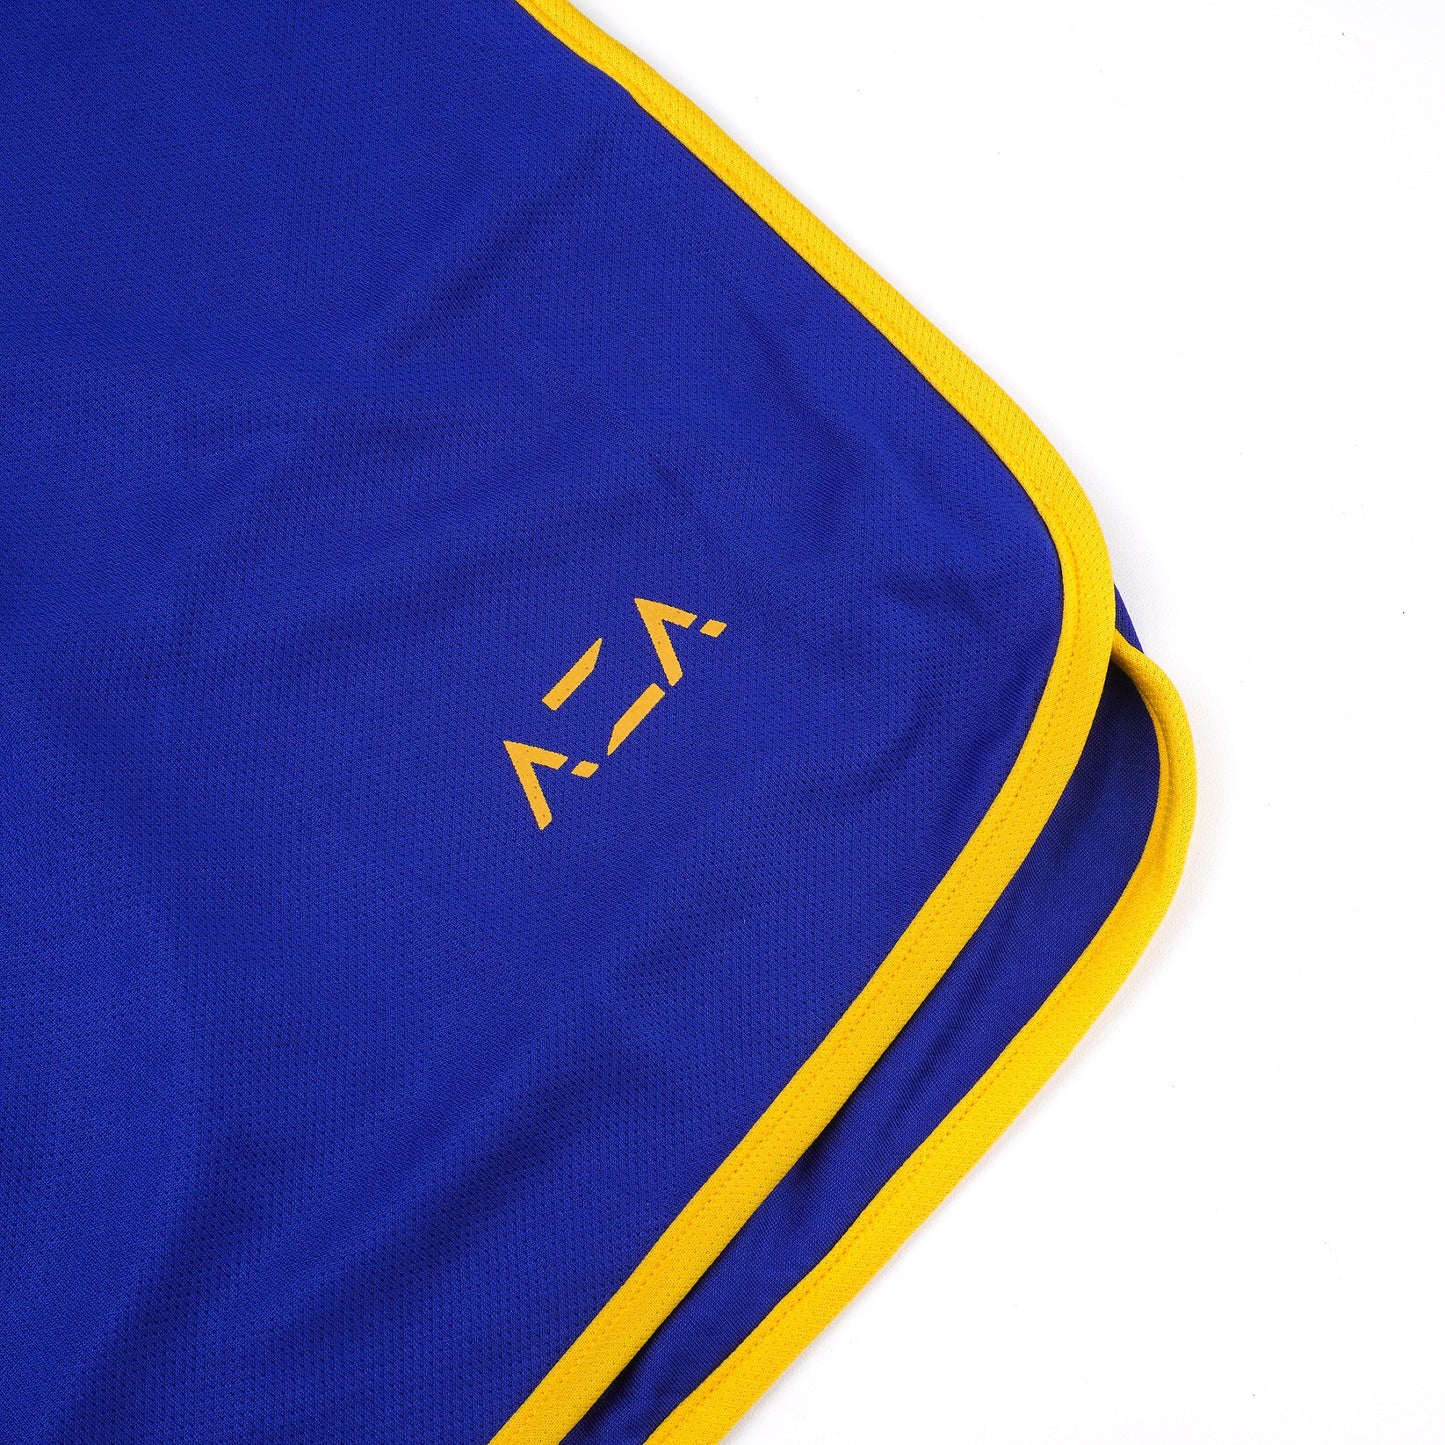 AZA Basketball Icon Shorts - Blue/Yellow